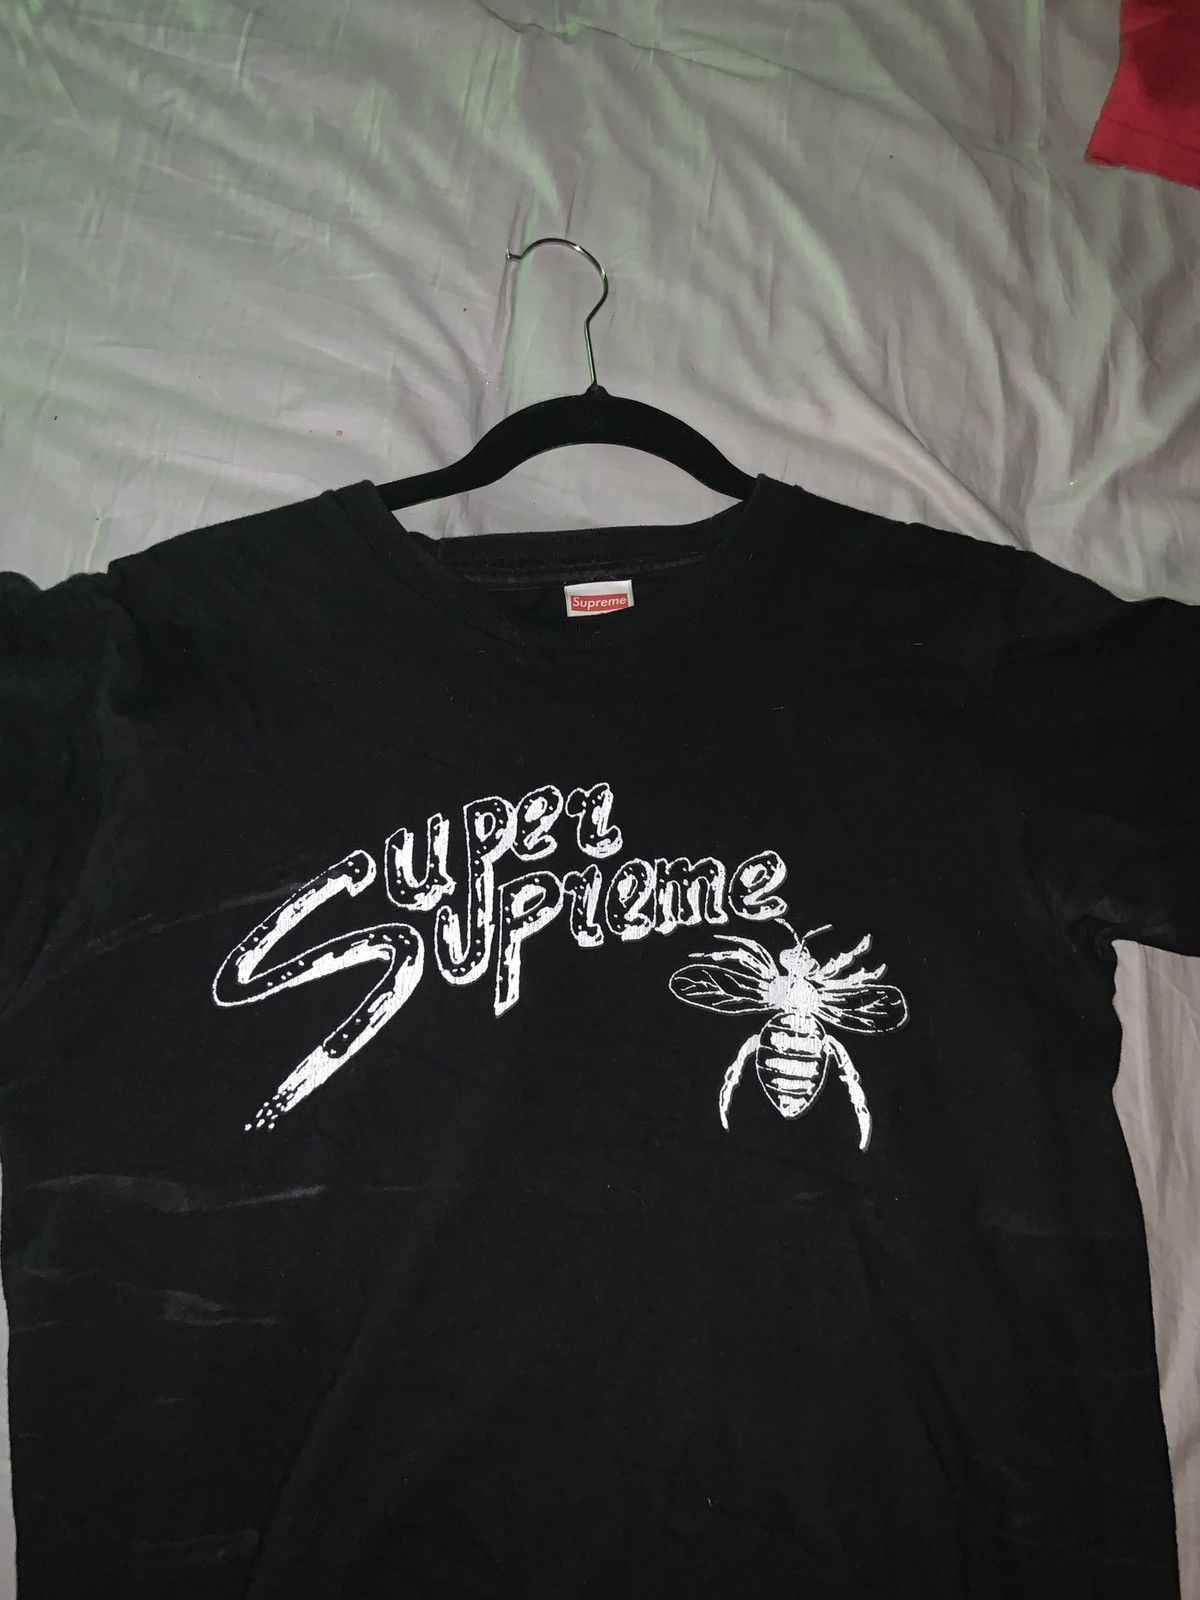 Supreme Wilfred Limonius Super Supreme Tee Black Men's - SS17 - US